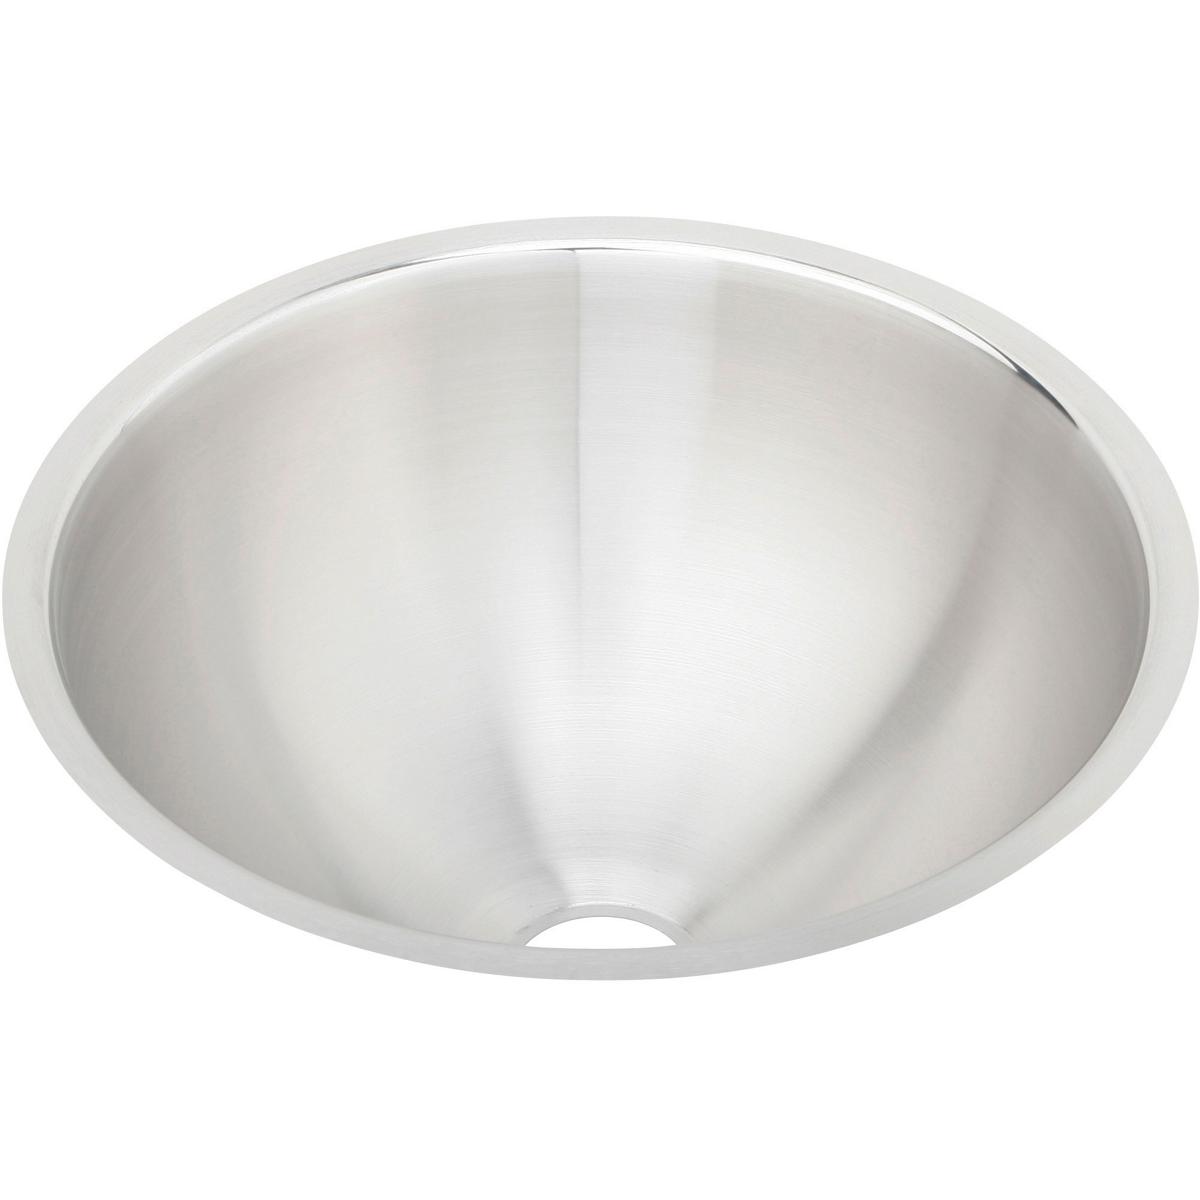 Elkay Asana 14-3/8" x 14-3/8" x 6" Stainless Steel Single Bowl Undermount Bathroom Sink